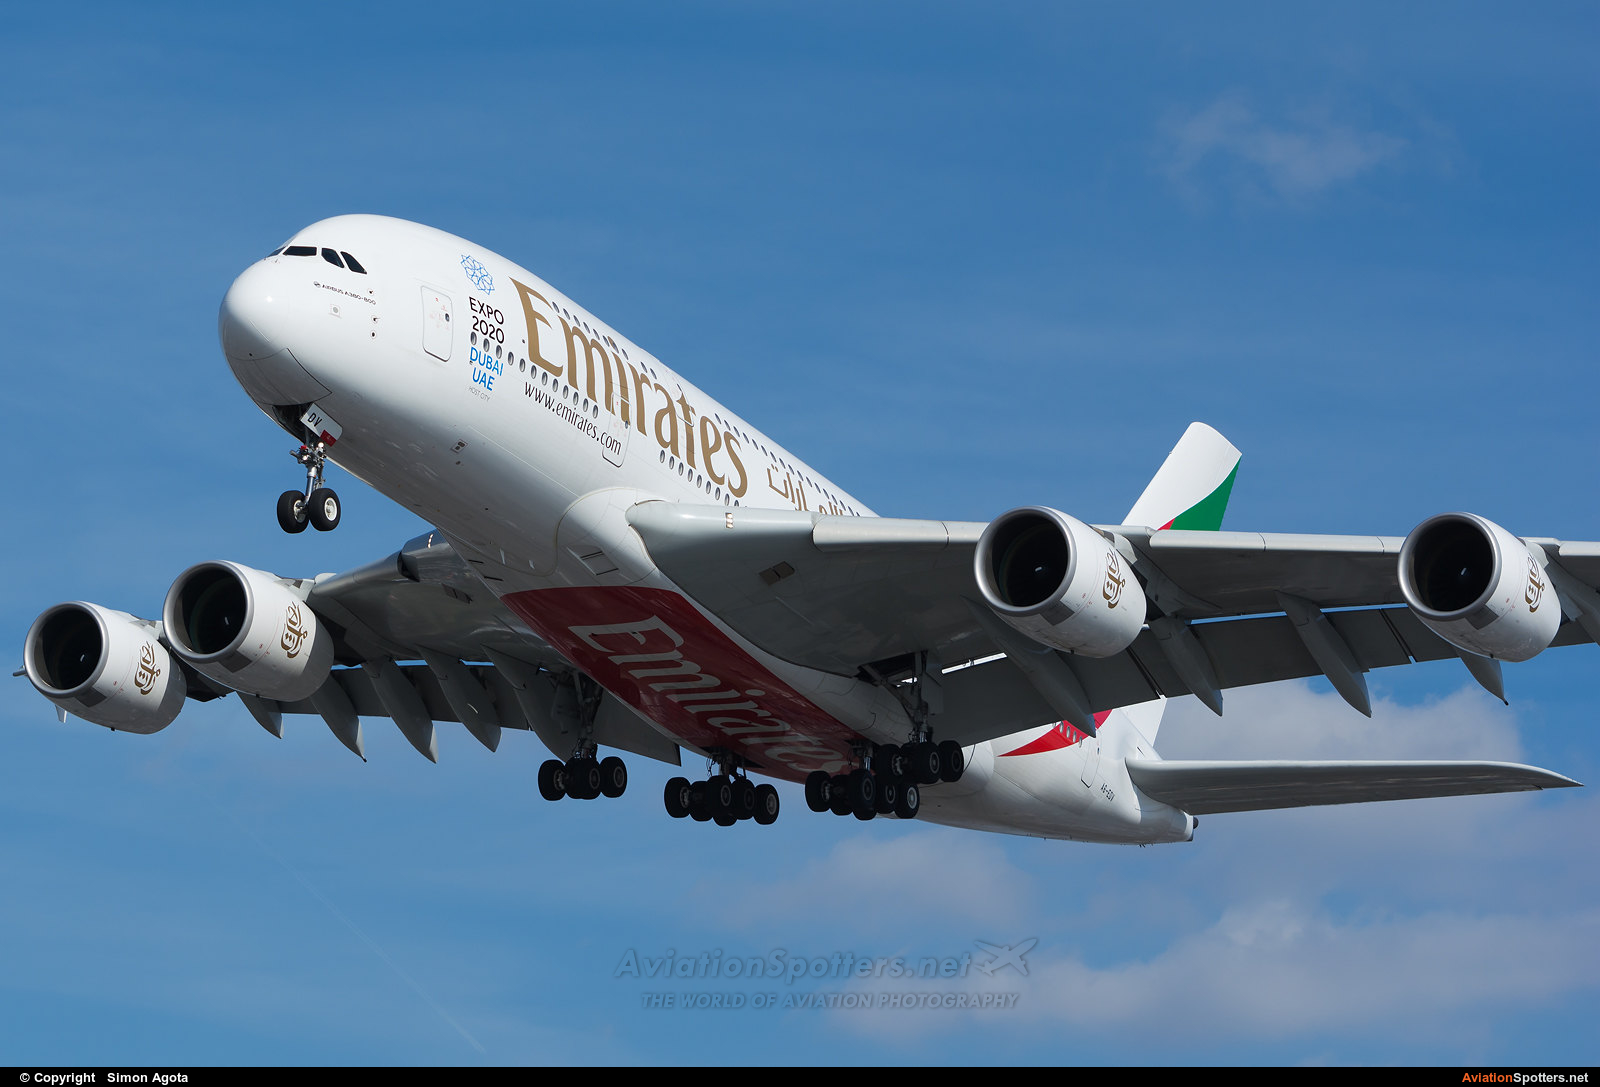 Emirates Airlines  -  A380-861  (A6-EDV) By Simon Agota (goti80)